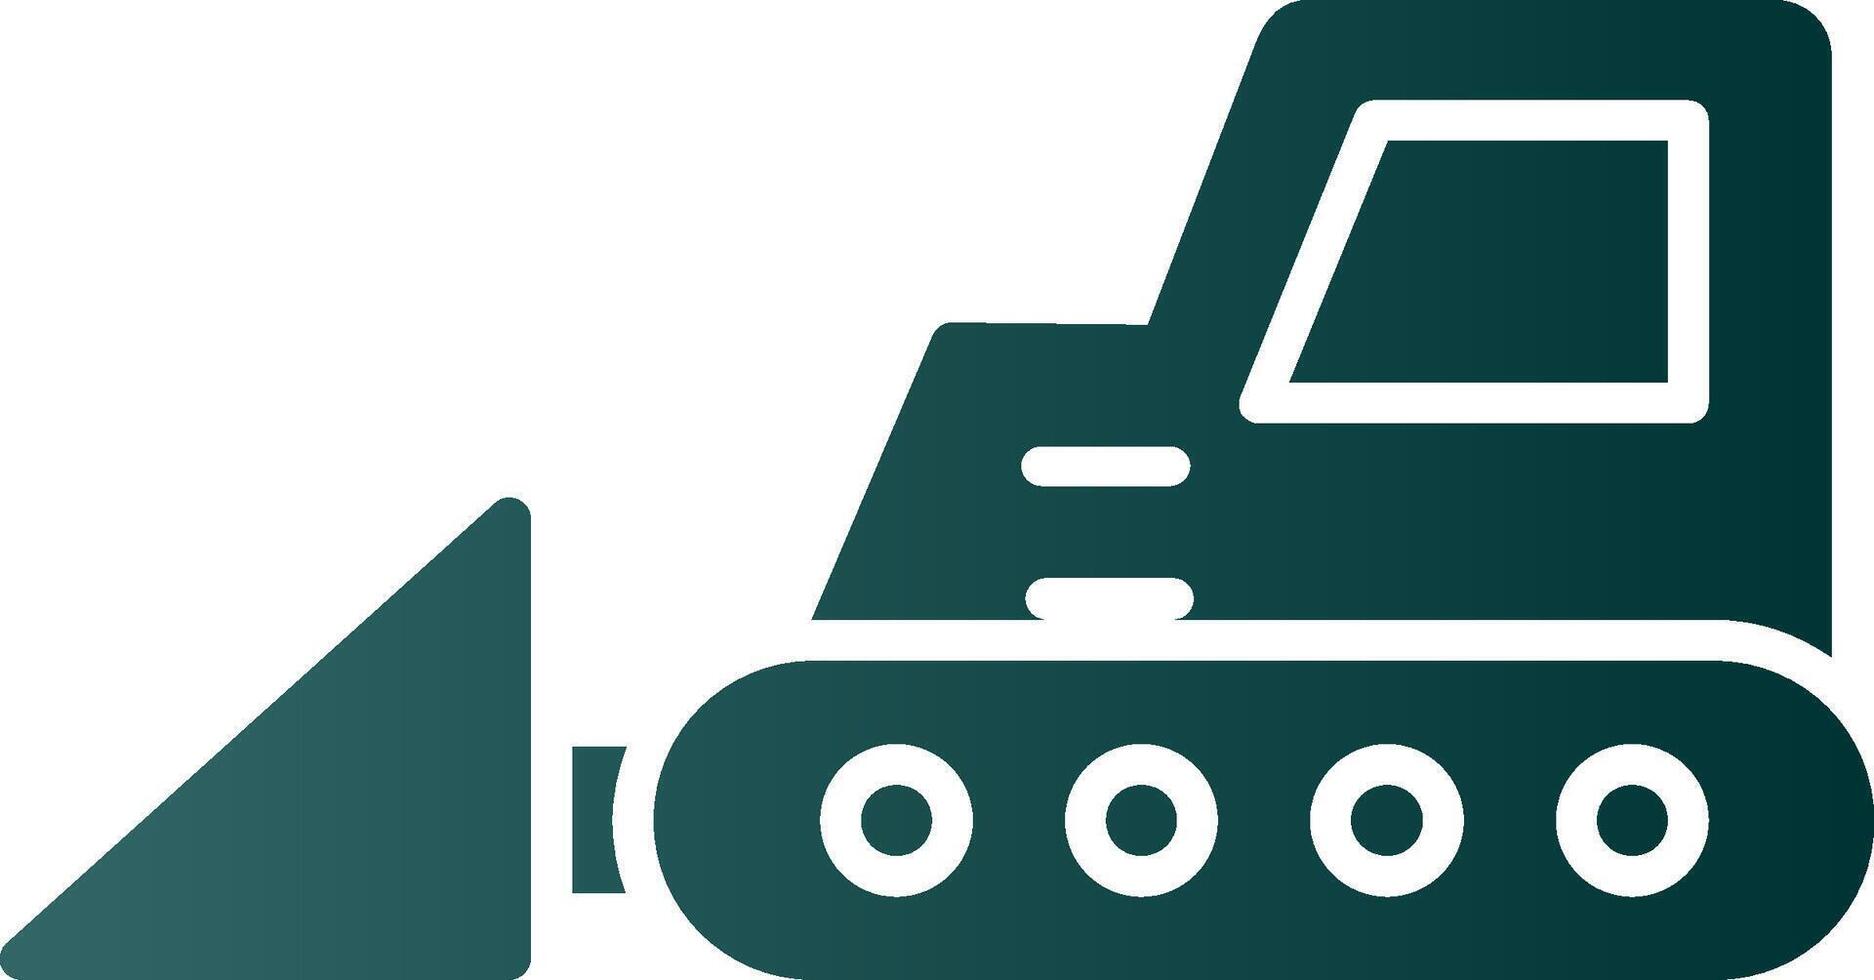 icône de dégradé de glyphe de bulldozer vecteur